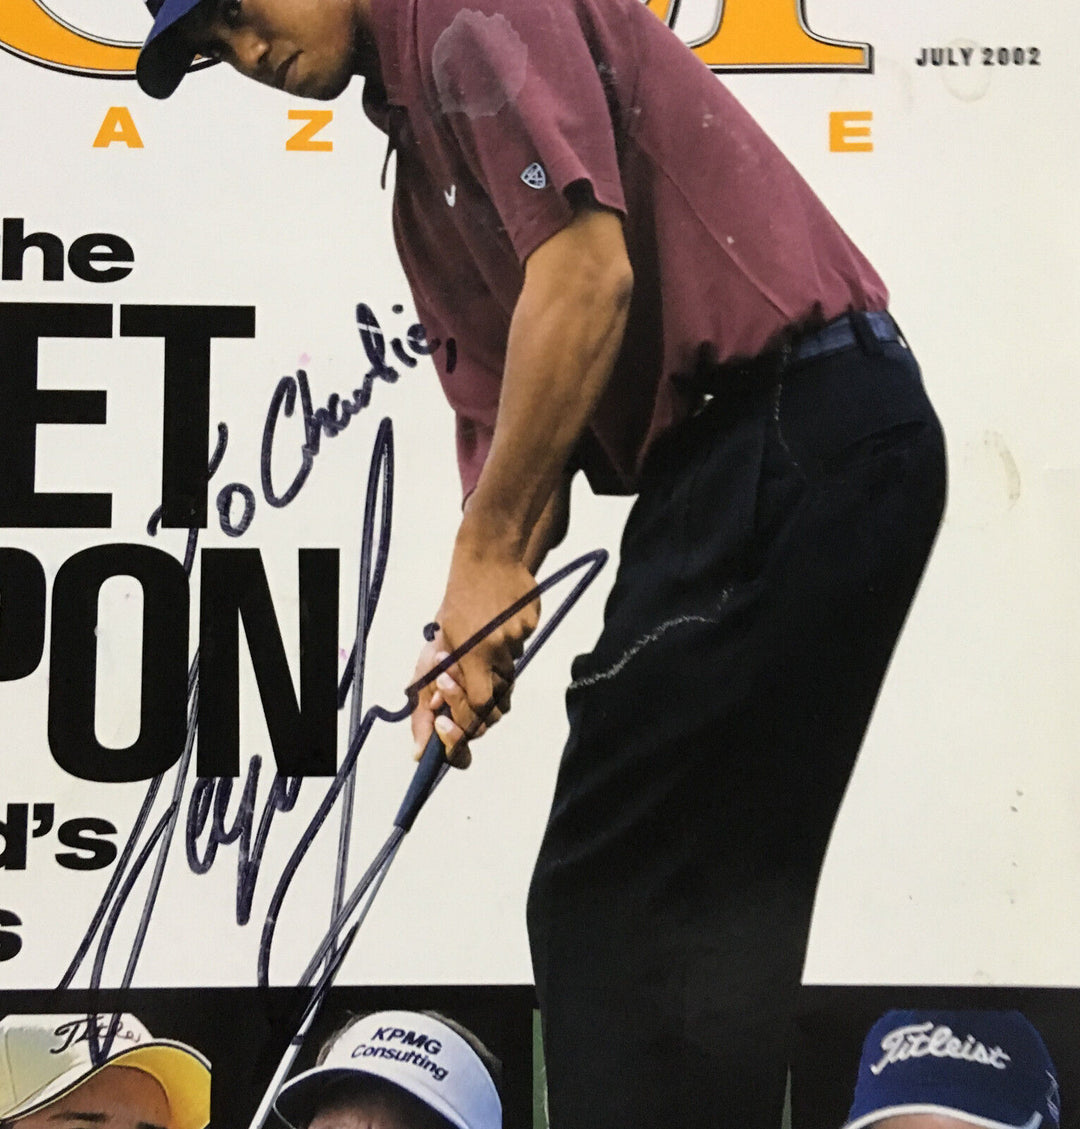 Sergio Garcia  signed July 2002 Golf Magazine to Charlie autograph CBM COA Image 4